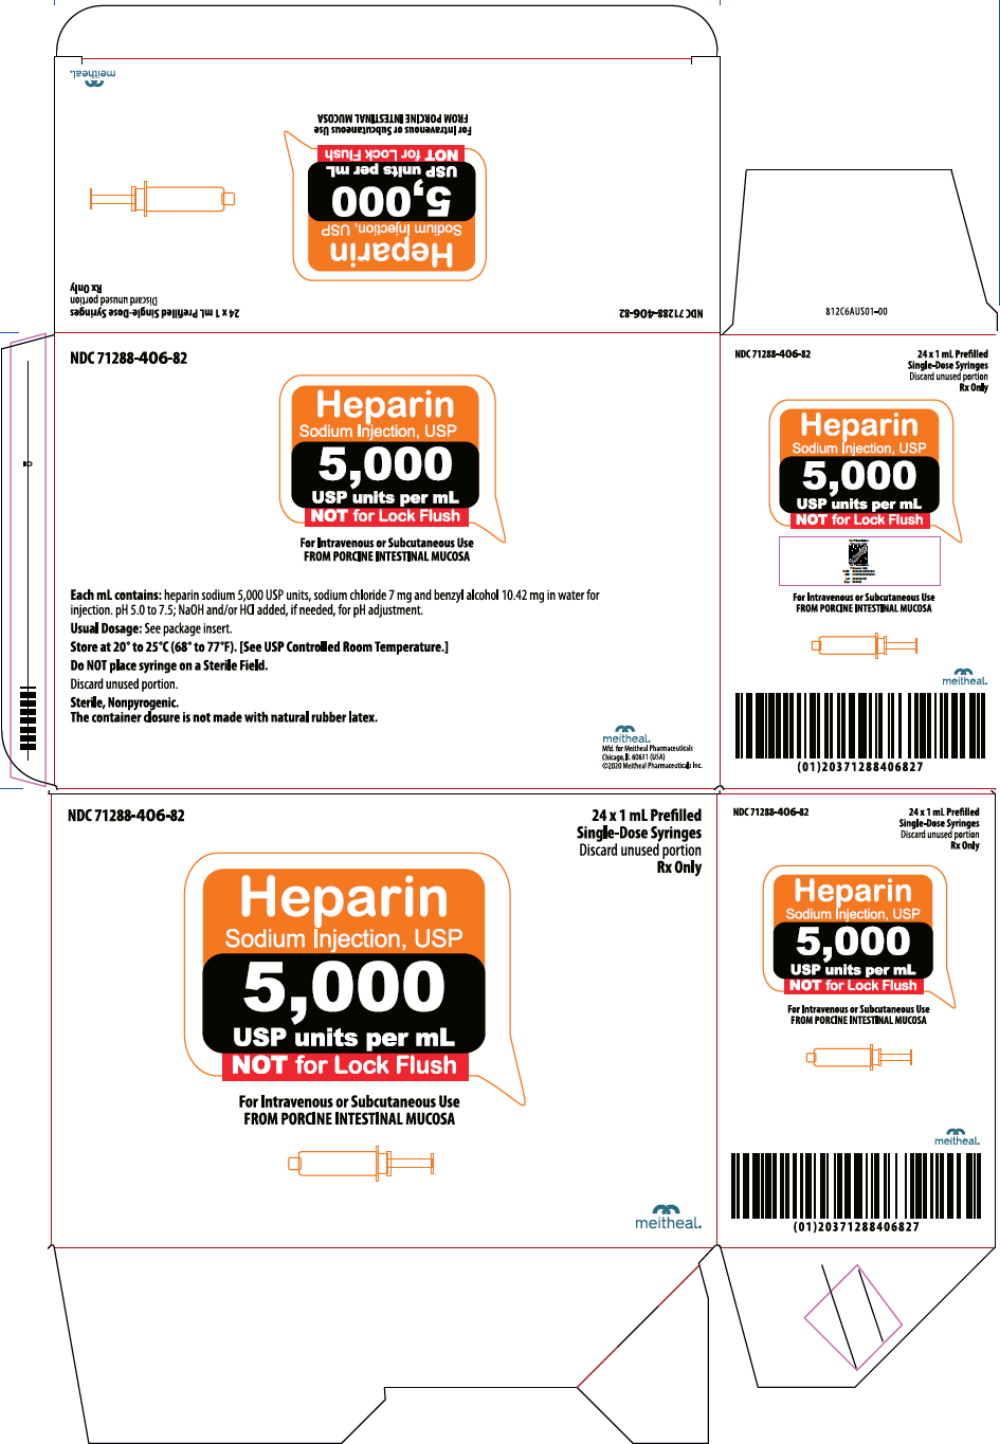 Principal Display Panel – Heparin Sodium Injection, USP 5,000 USP units per mL Carton
